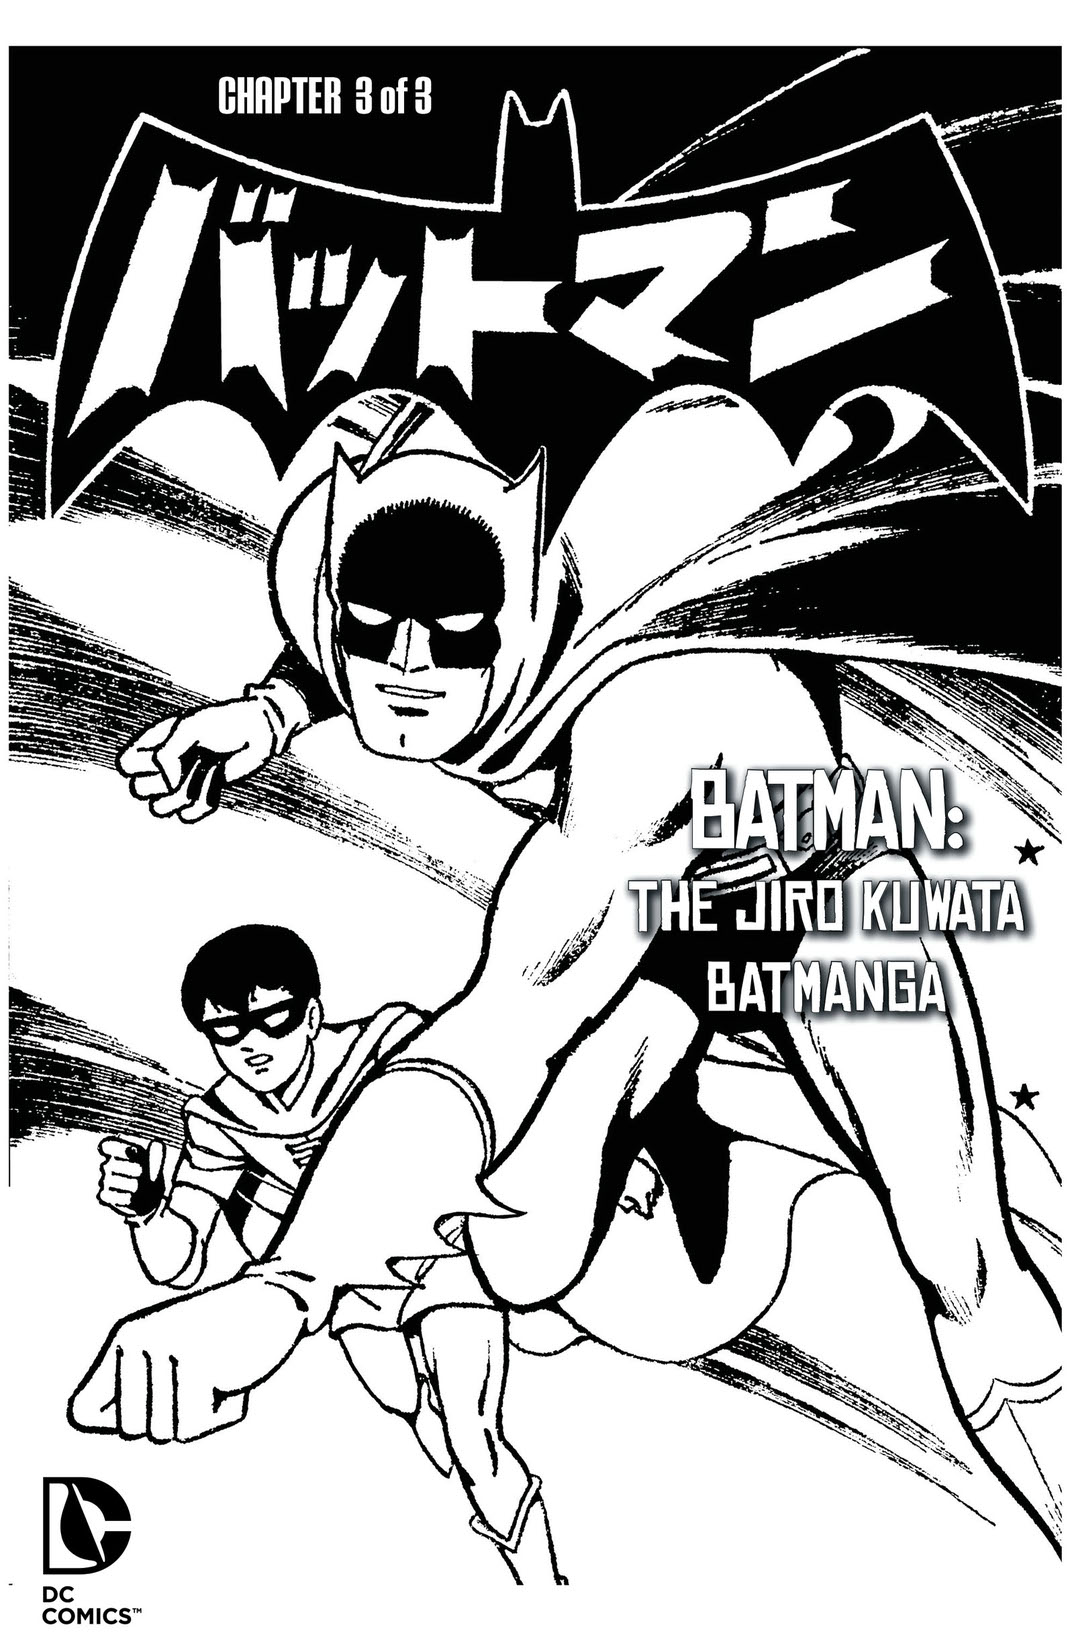 Batman: The Jiro Kuwata Batmanga #30 preview images